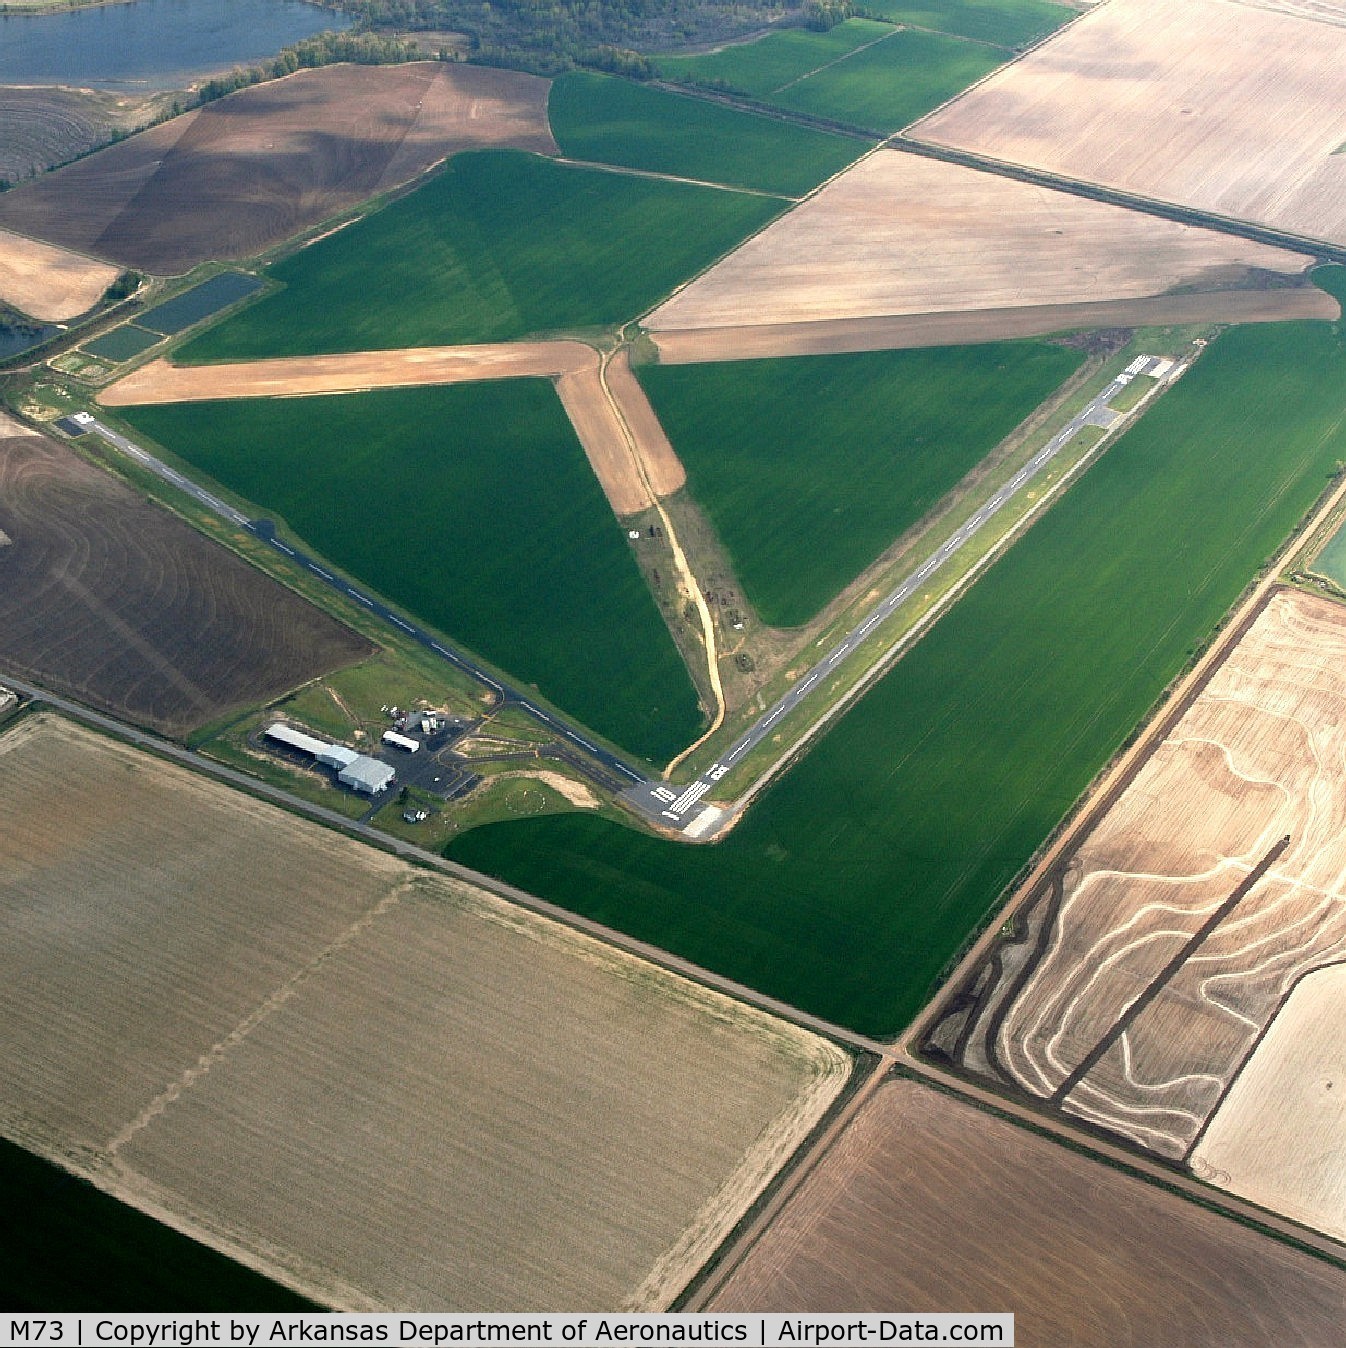 Almyra Municipal Airport (M73) - Aerial Photo, courtesy of Arkansas Department of Aeronautics